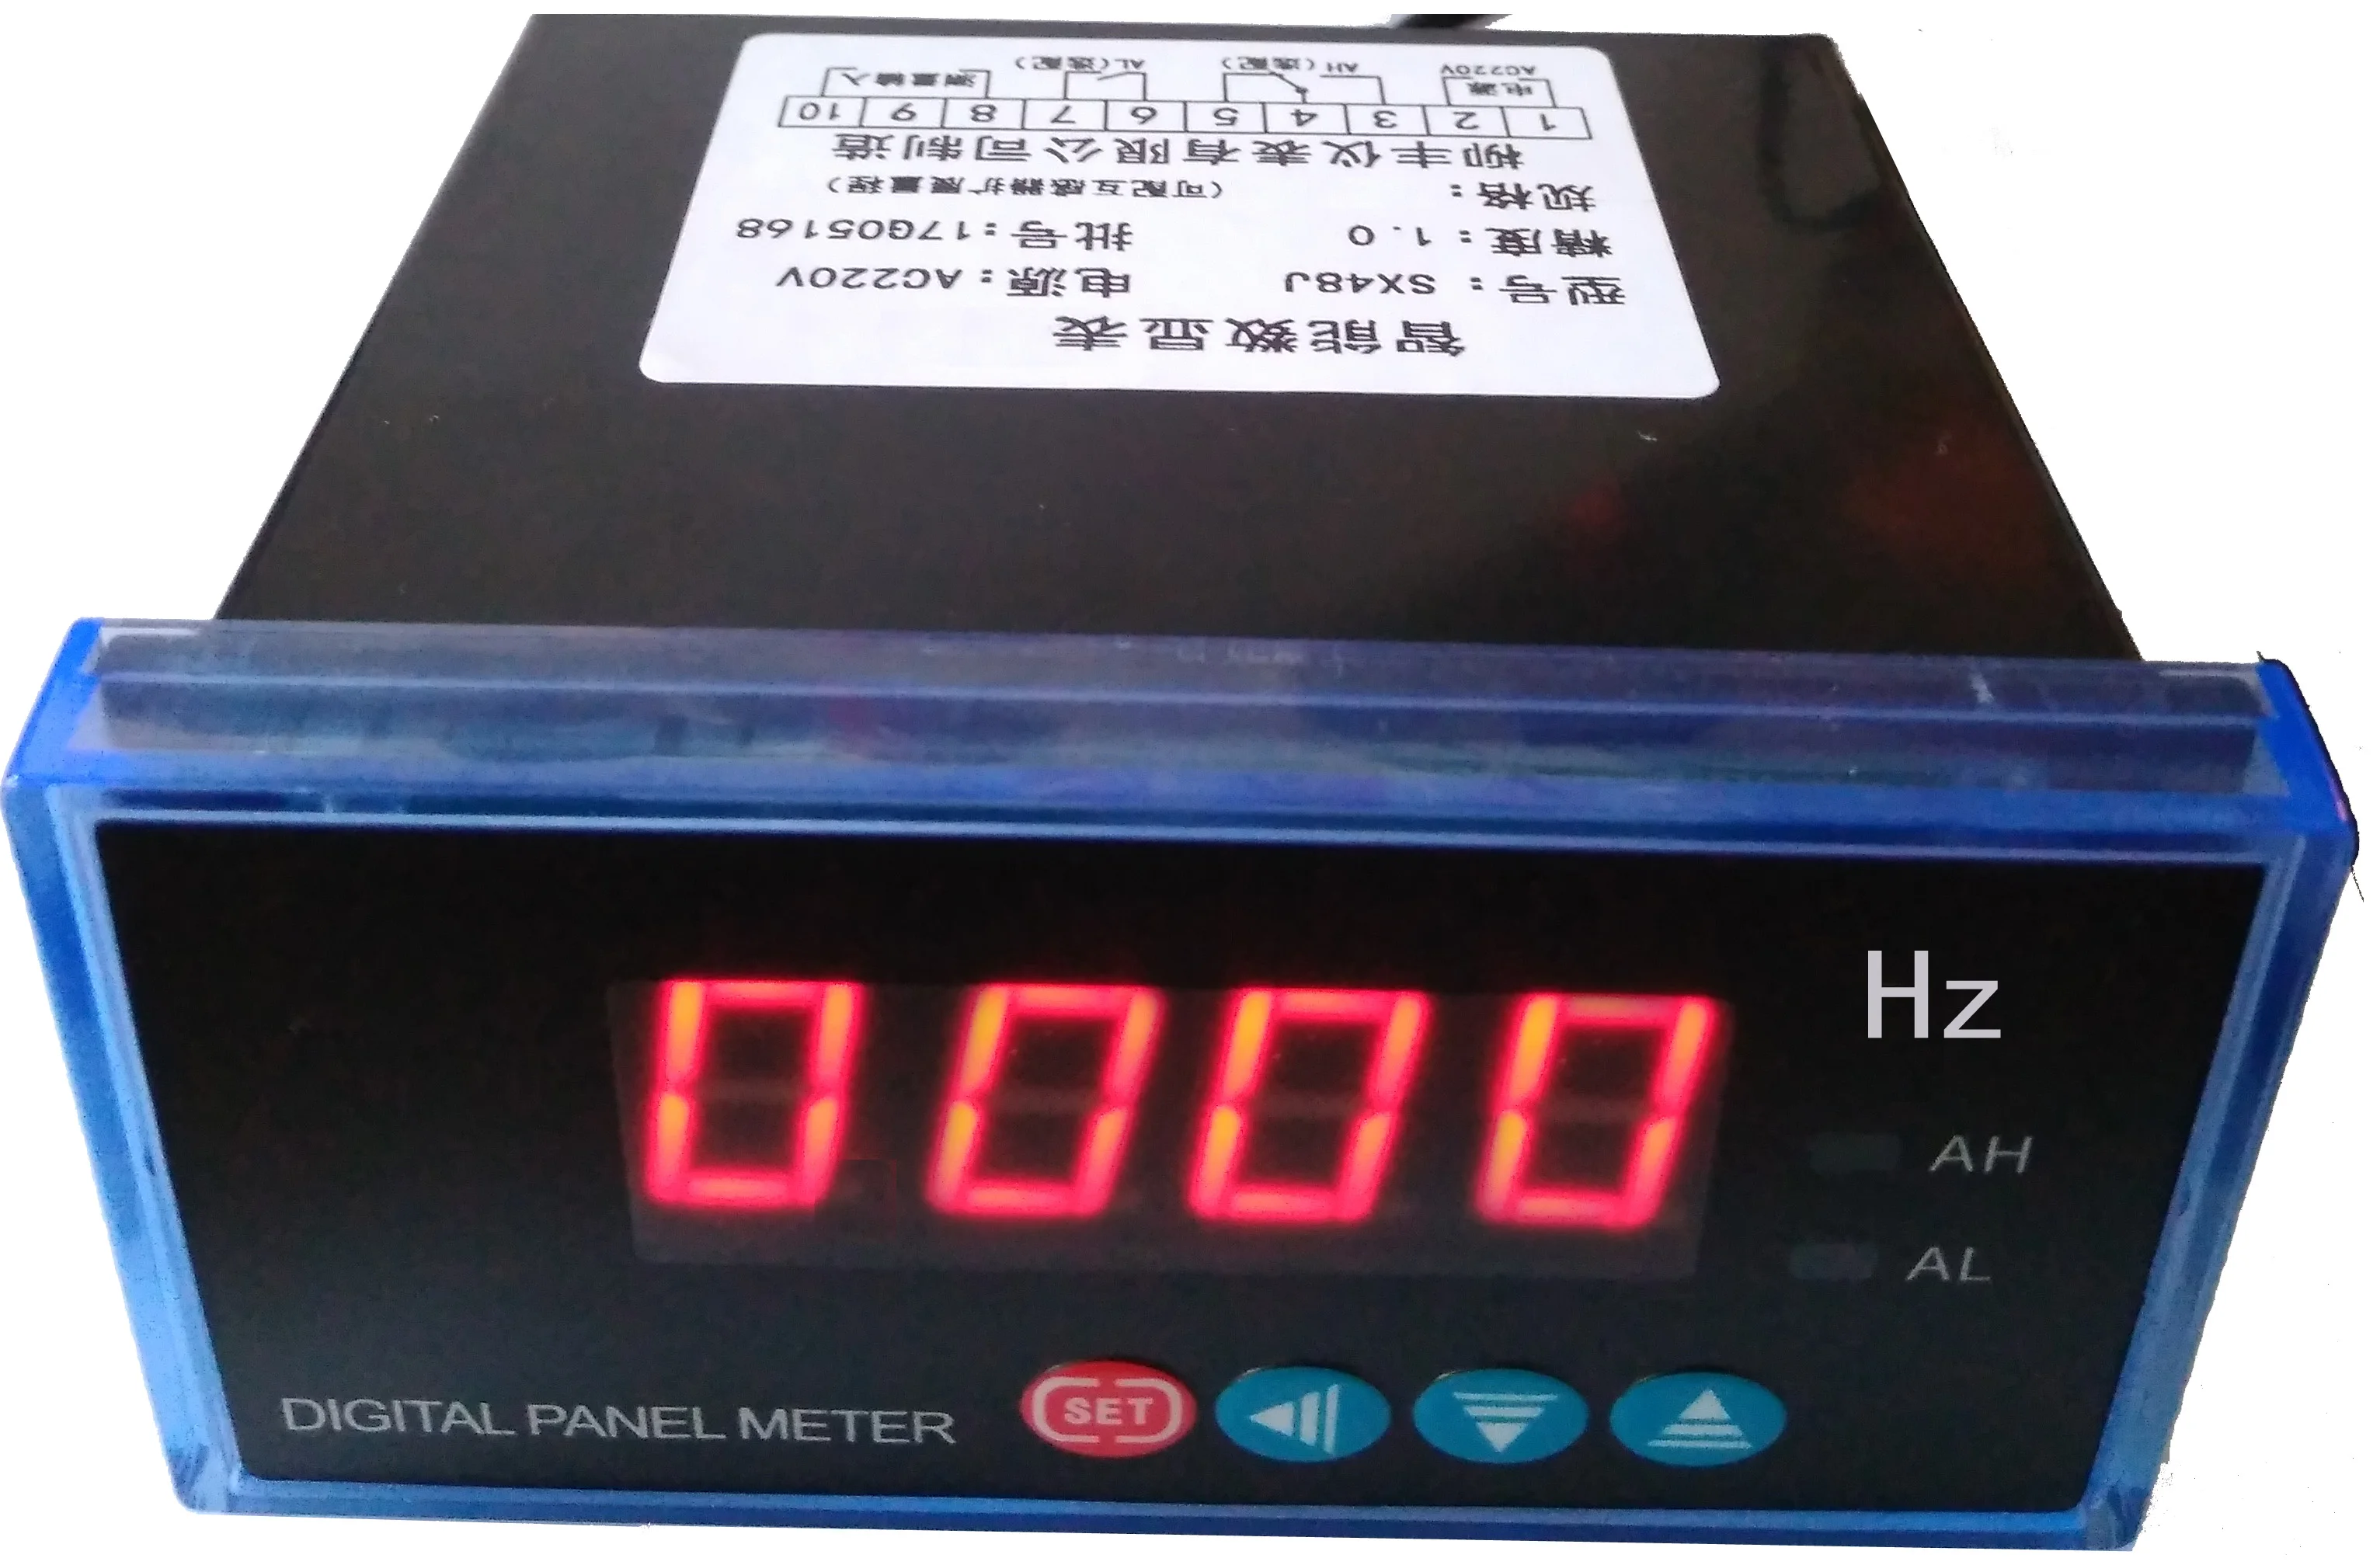 

Inverter External Digital Display Meter 0-10V Motor Tachometer Ammeter 4-20mA Frequency Line Speed Meter SX48